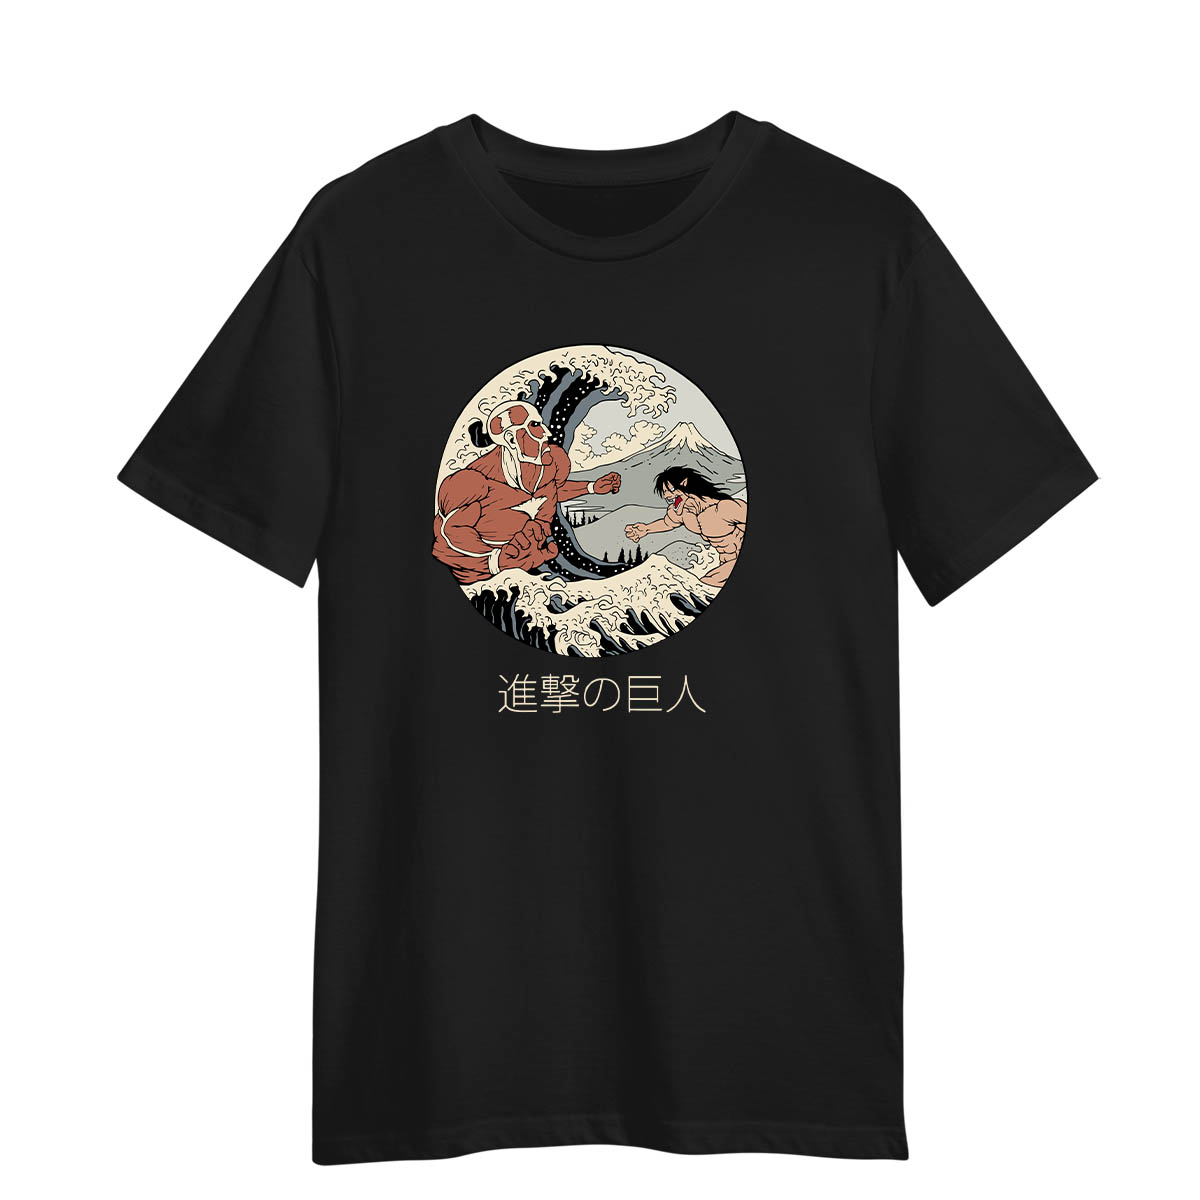 My Hero Academia Japanese Anime Adult Unisex Black T-shirt